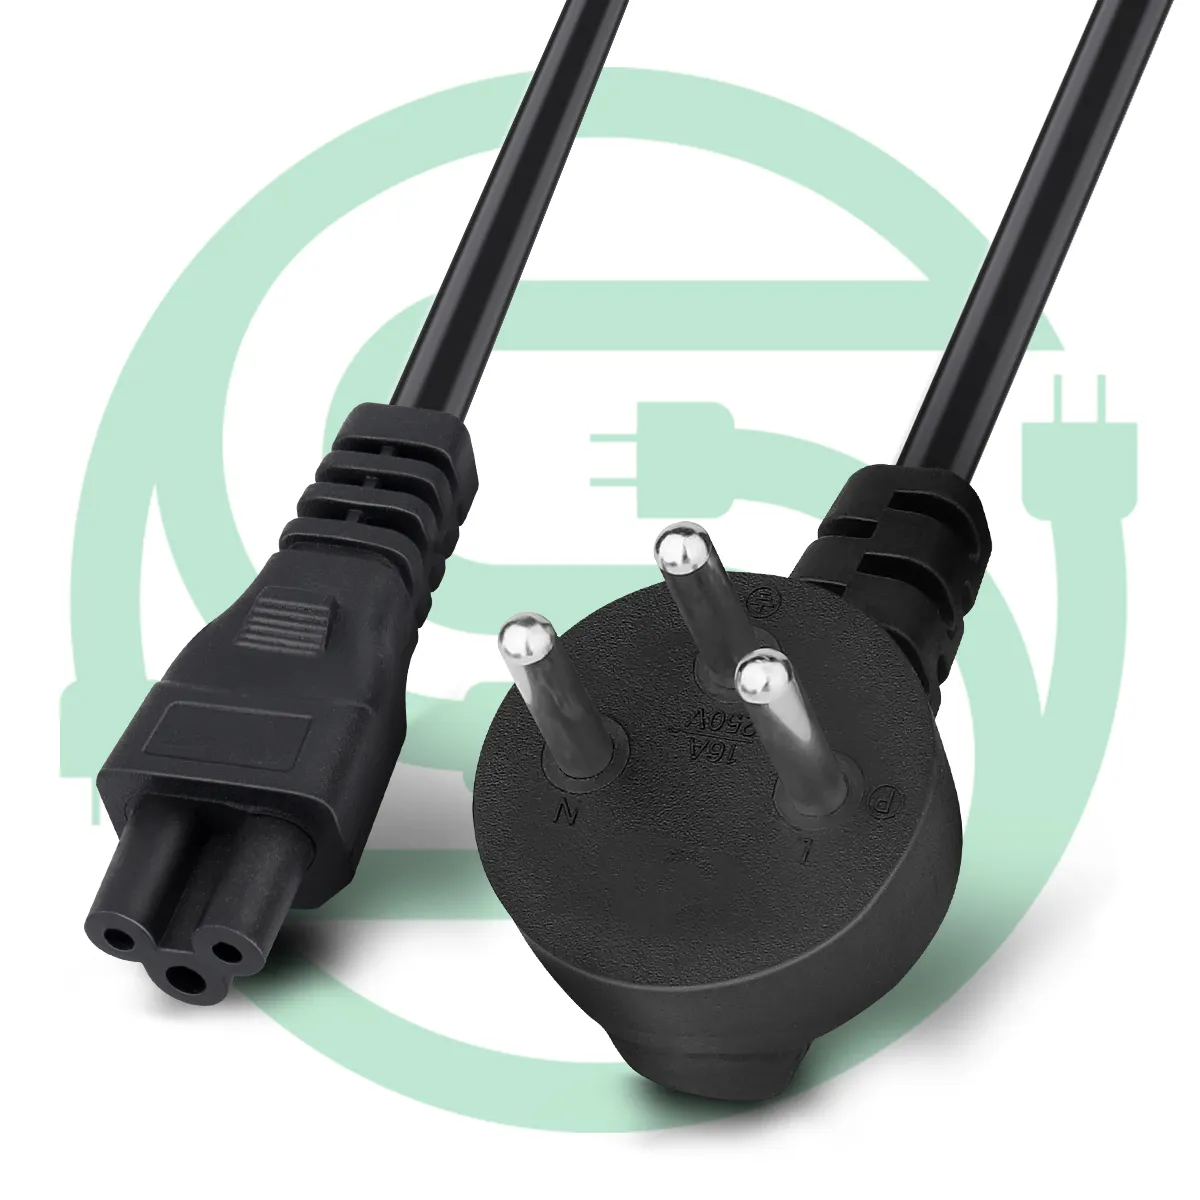 Kabel Ekstensi Asli Kabel Daya 1.8M untuk Apple MacBook Pro Air AC Adaptor Pengisi Daya US EU UK AU UK Ekstensi Kabel Tersedia